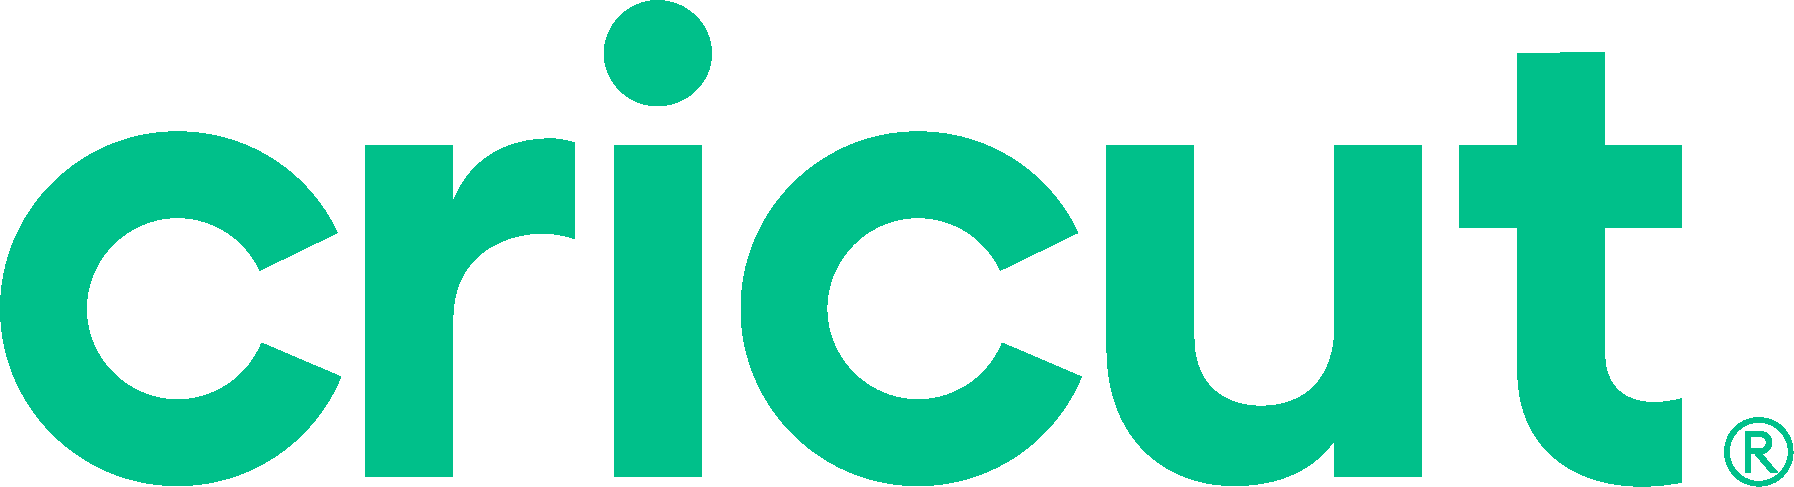 Cricut, Inc. Company Logo